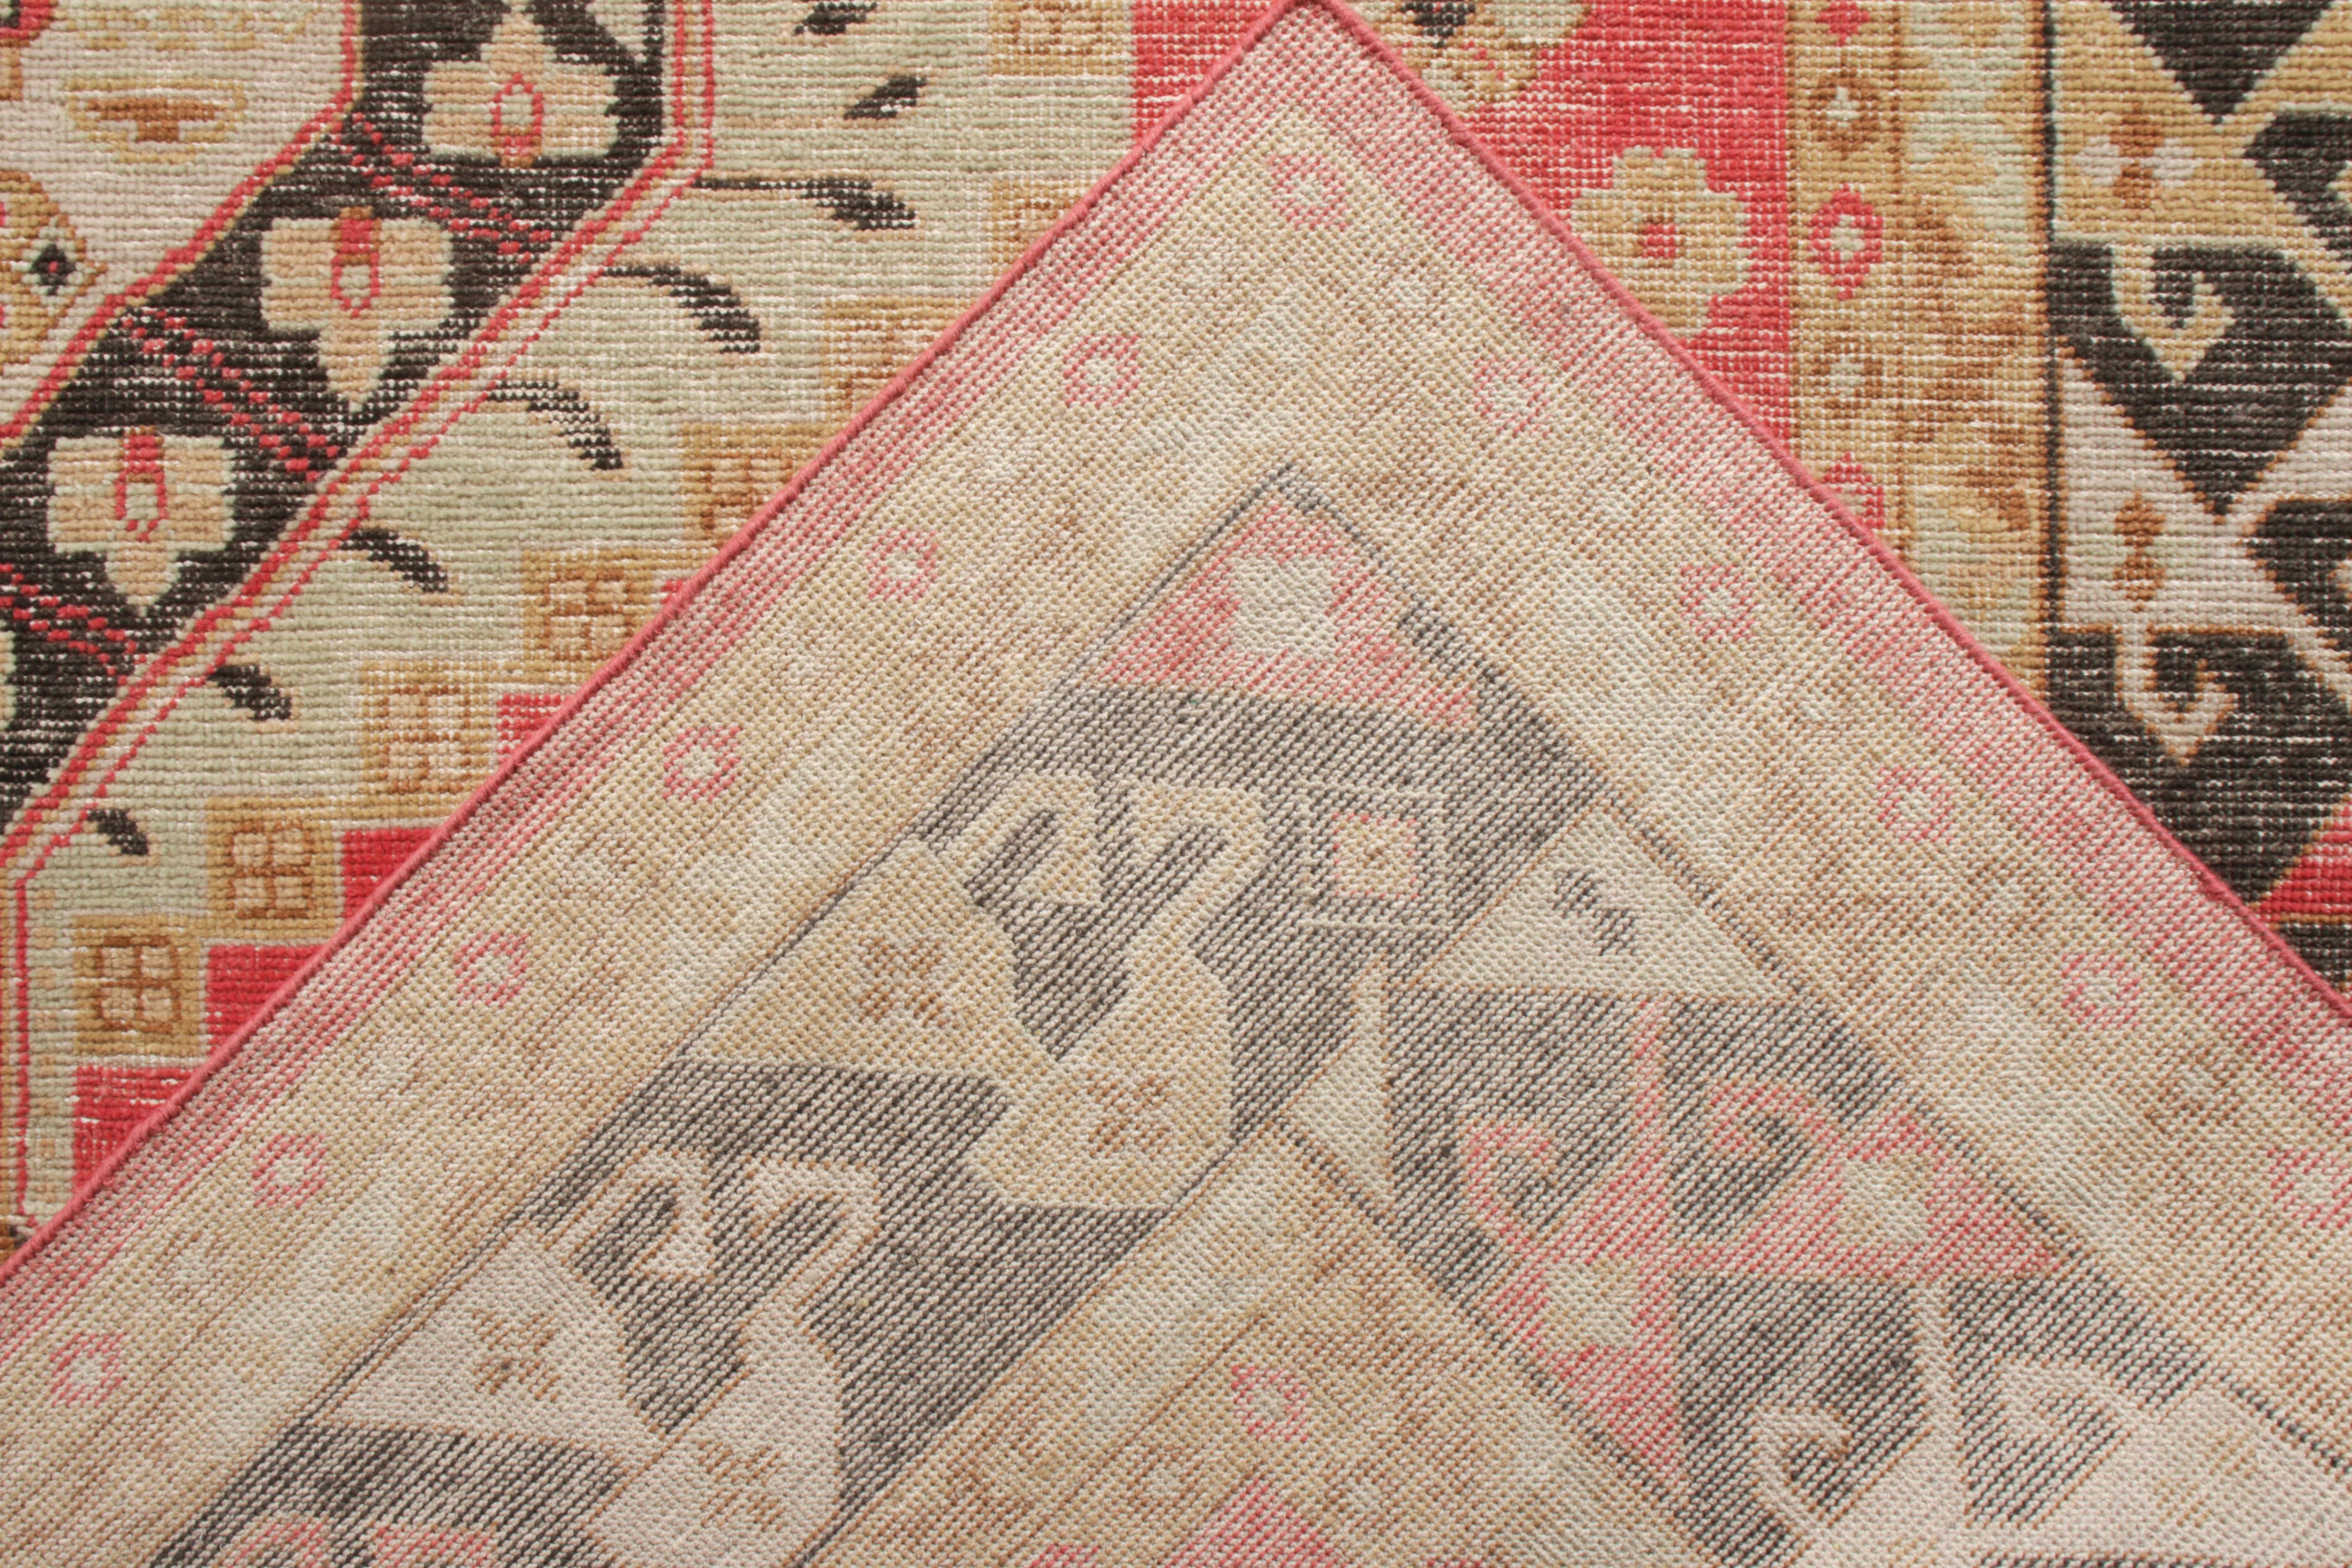 Rug & Kilim's Distressed Classic Style Teppich in Rot, Beige-Braun Medaillon-Muster (Handgeknüpft) im Angebot